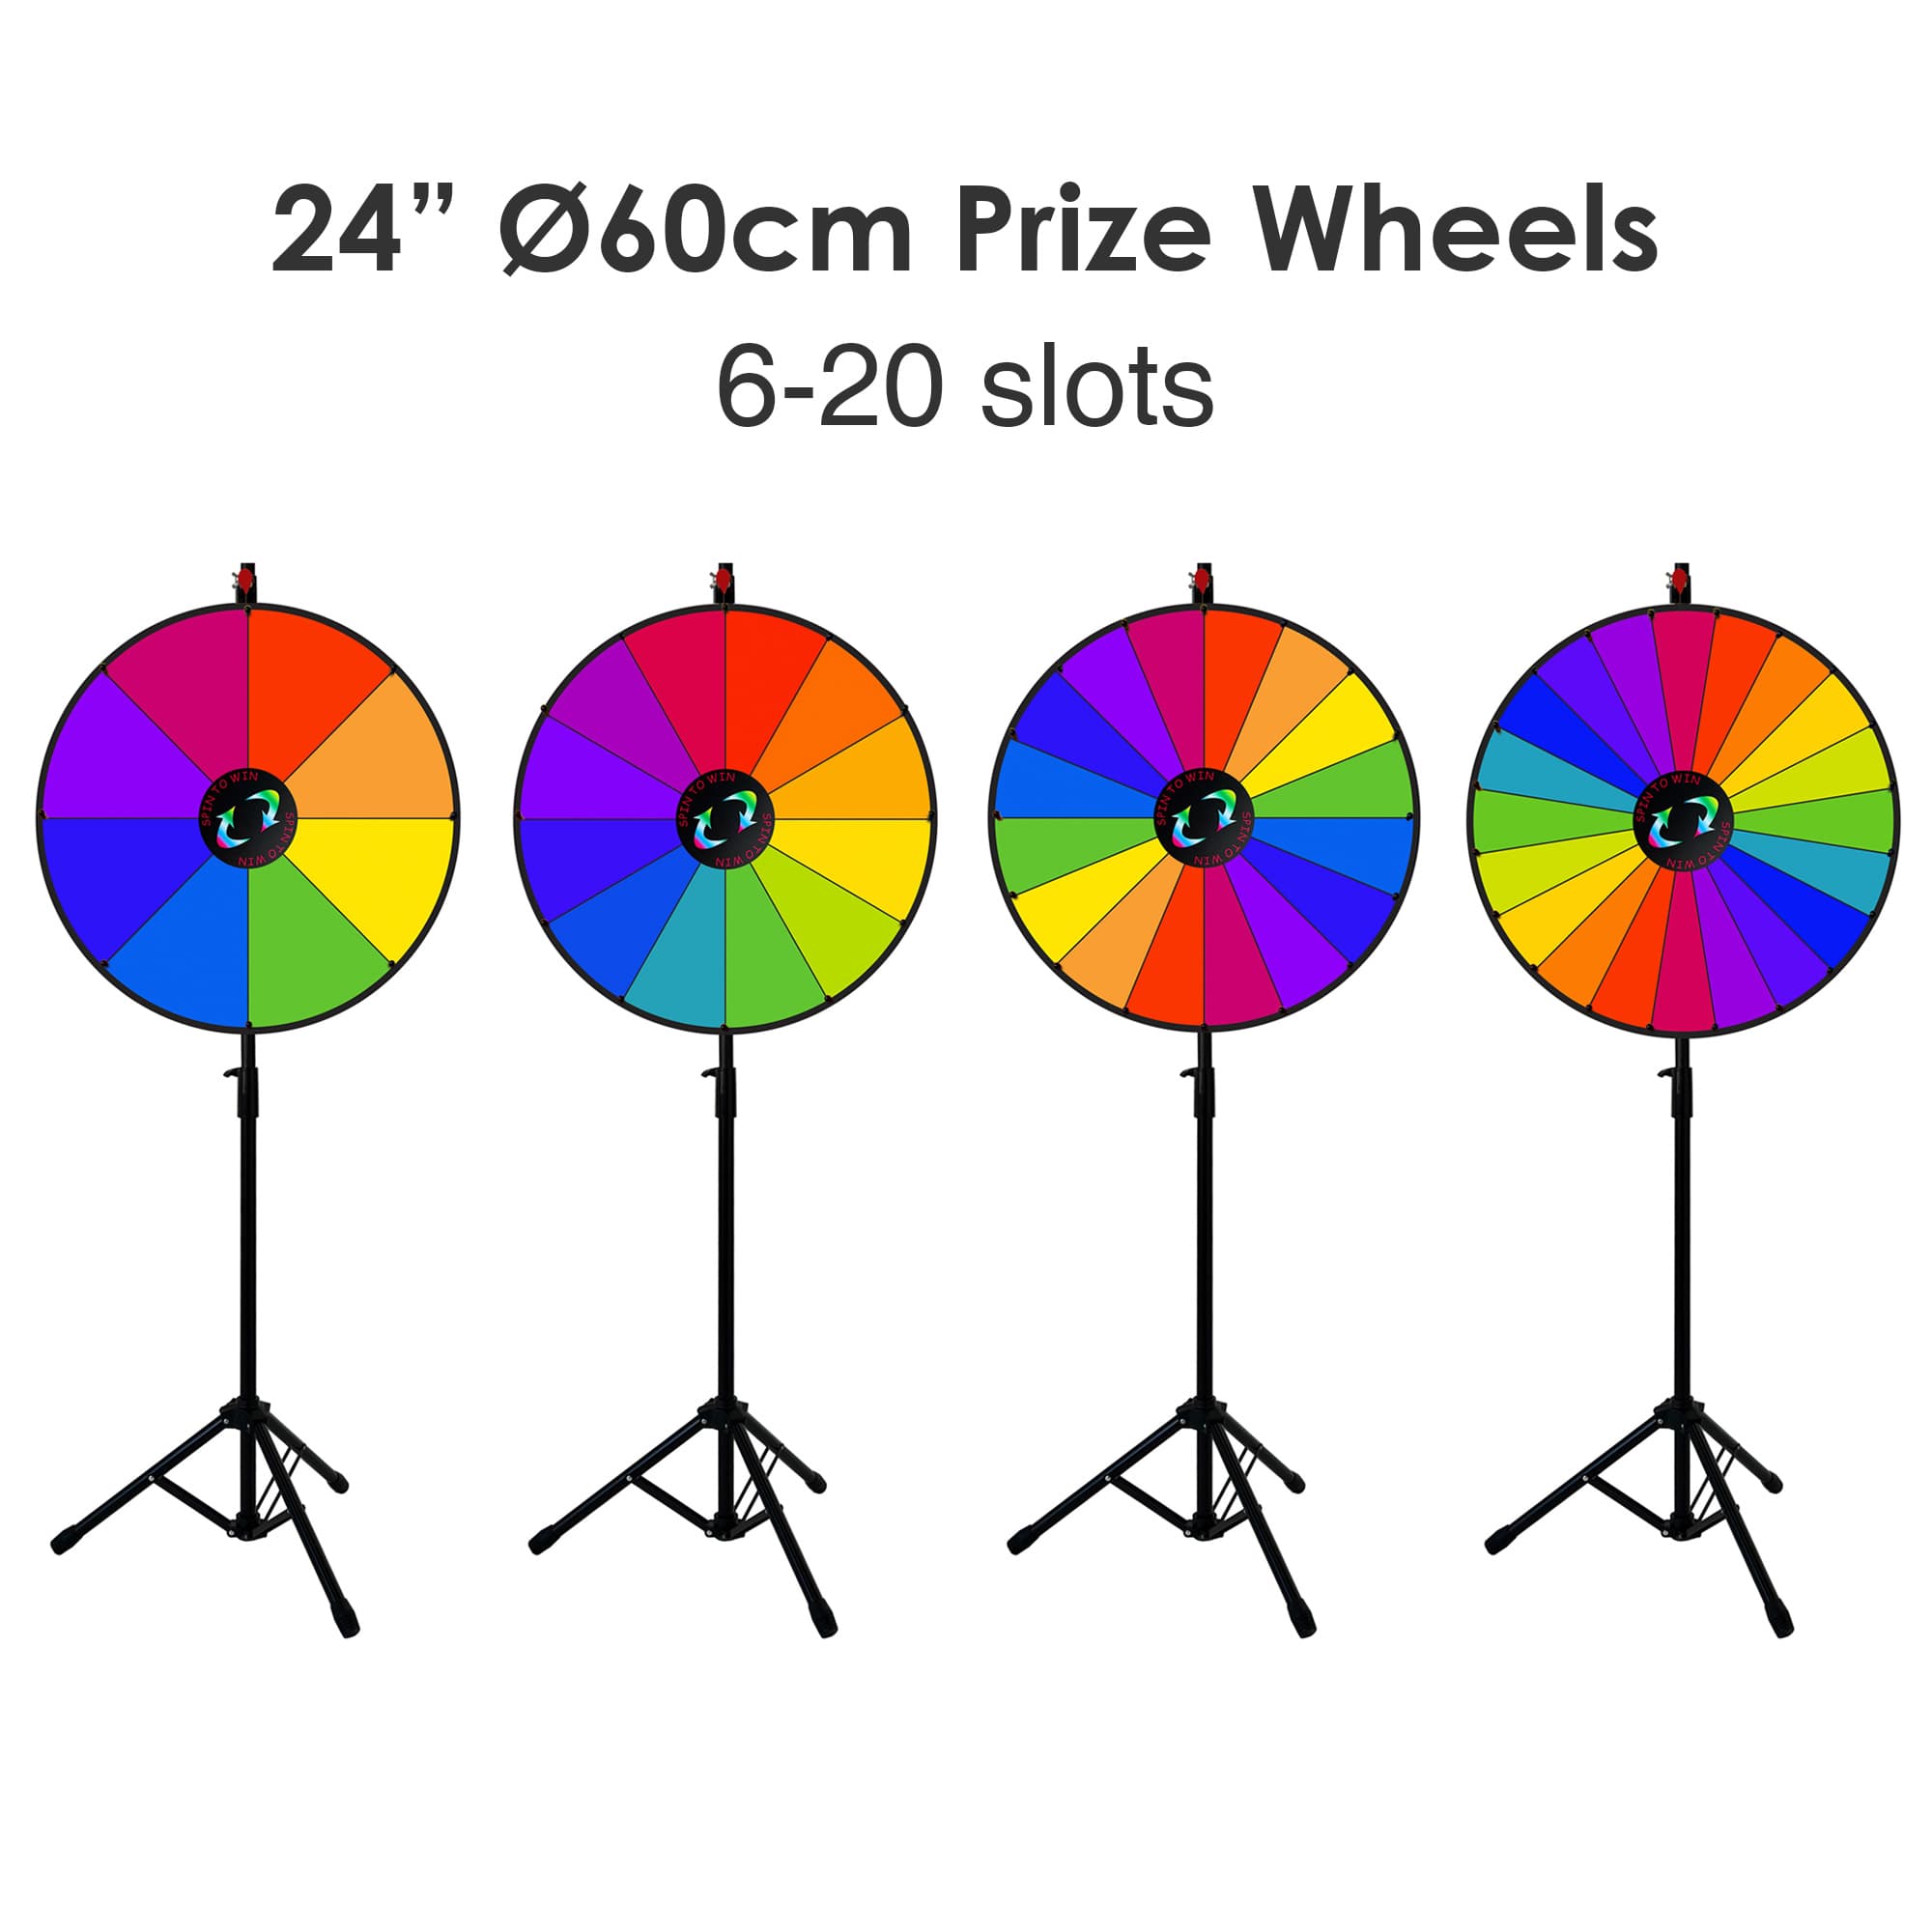 Prize wheel spinning wheels